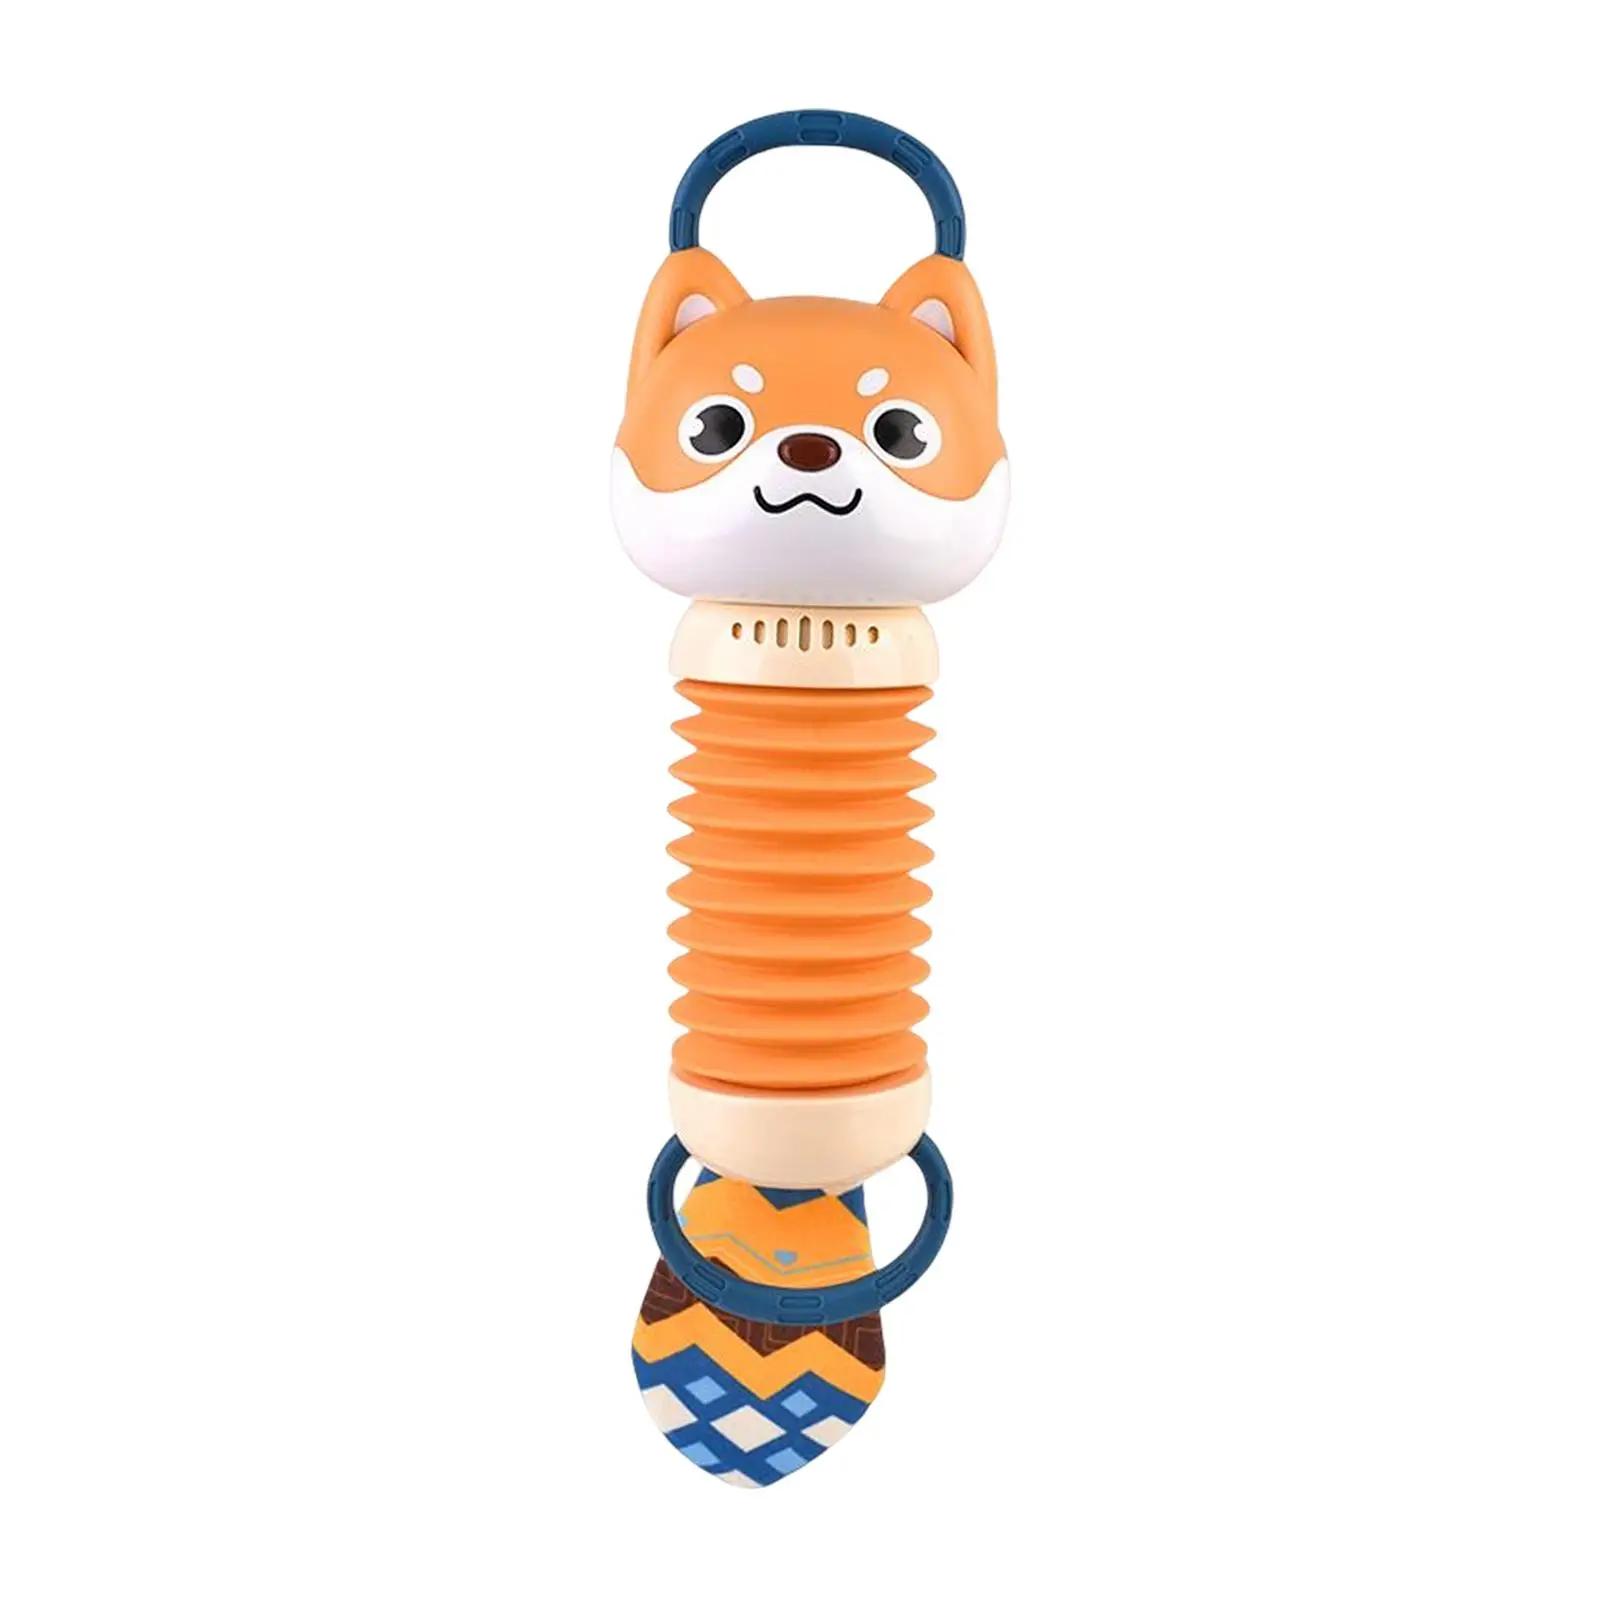 Accordion Toy Educational Pendant Music Enlightenment Tiger Dog Shape Developmental Soft for Preschool Beginners